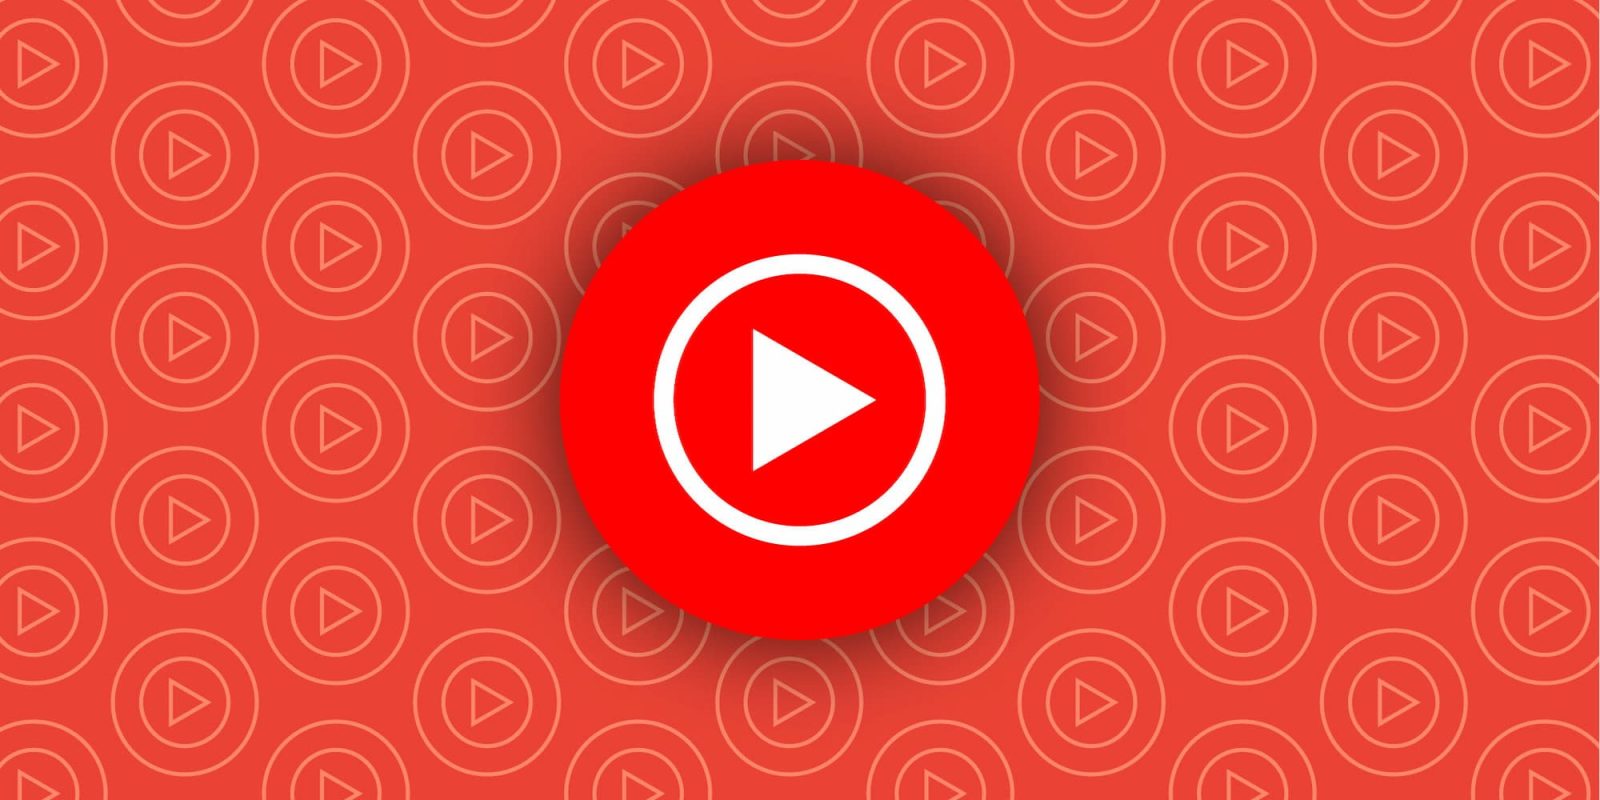 Логотип YouTube Music